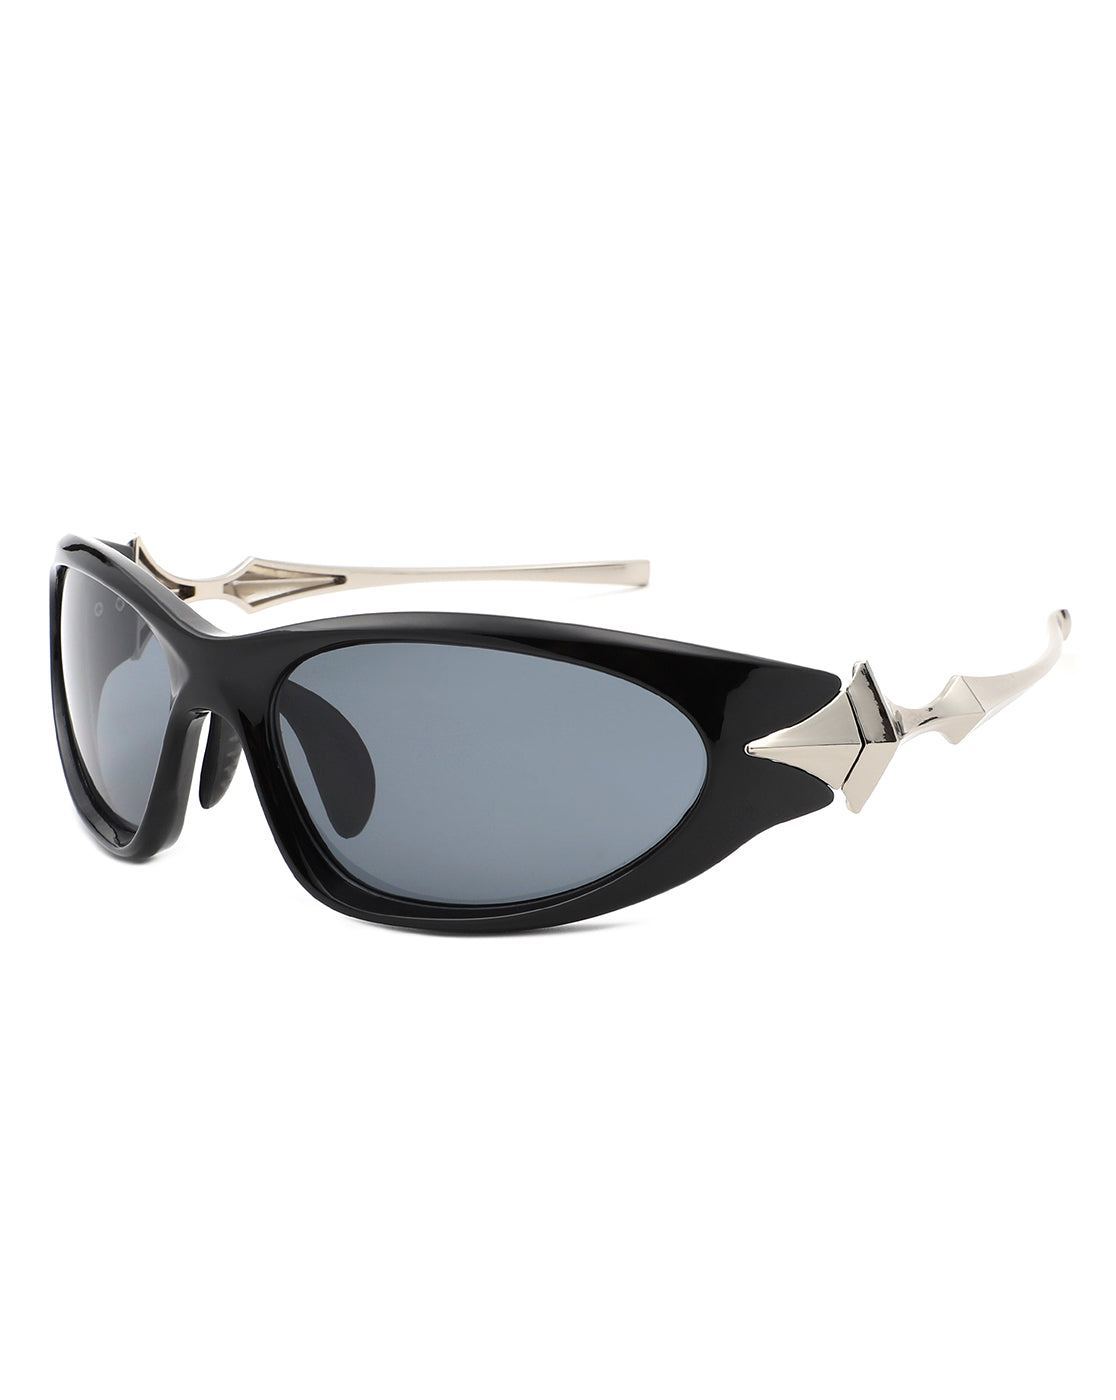 Cramilo Rectangle Wrap Around Sunglasses - Oval Frame Women's Fashion Sun Glasses - UVA & UVB Protection Polycarbonate Lens Eyewear